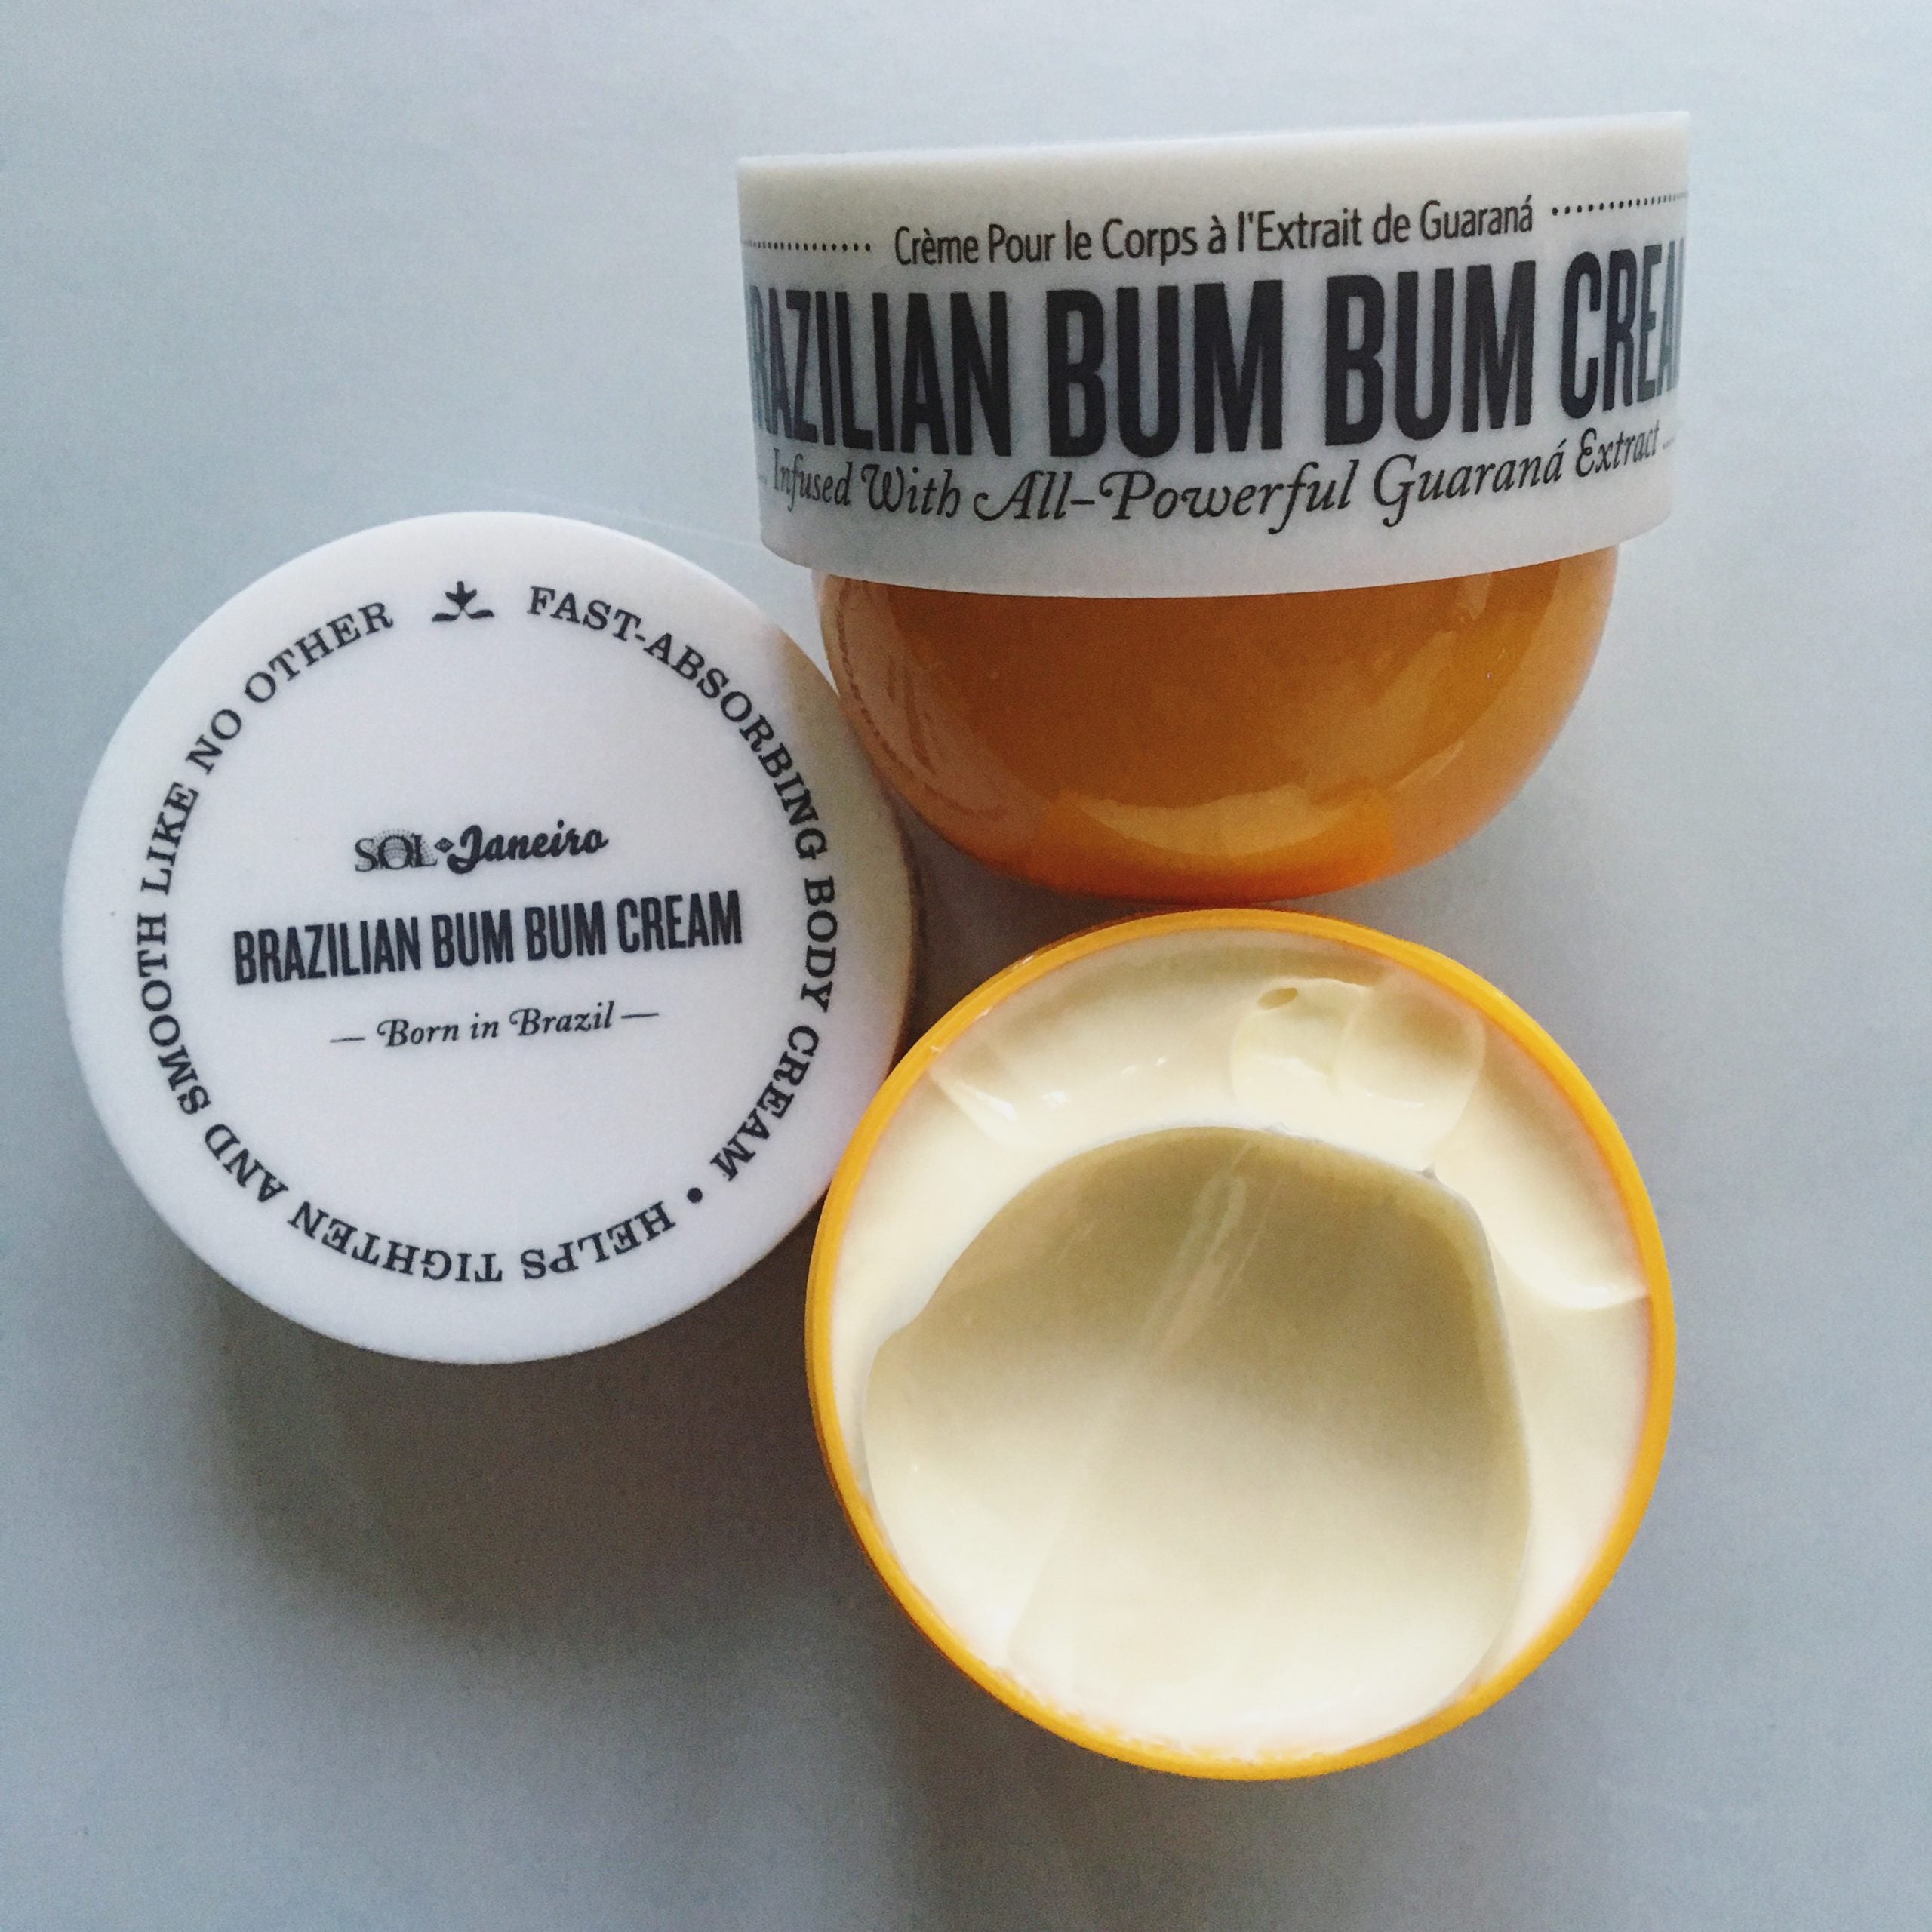 Skincare Review, Ingredients: Sol de Janiero Brazilian Bum Bum Cream